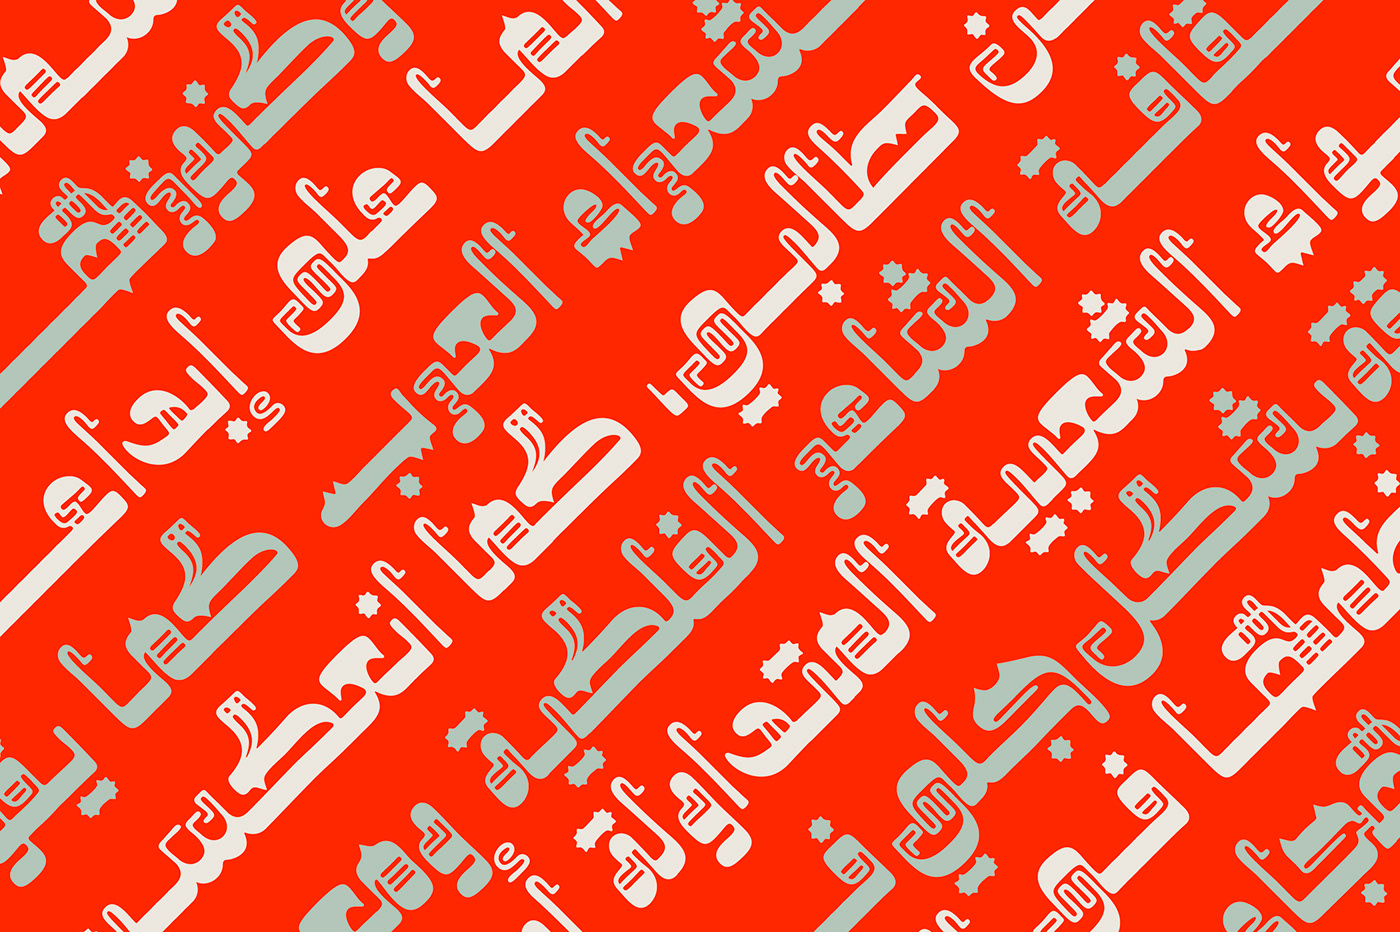 خط عربي خطوط فونت   تايبوجرافي arabic font Typeface lettering Calligraphy   islamicart